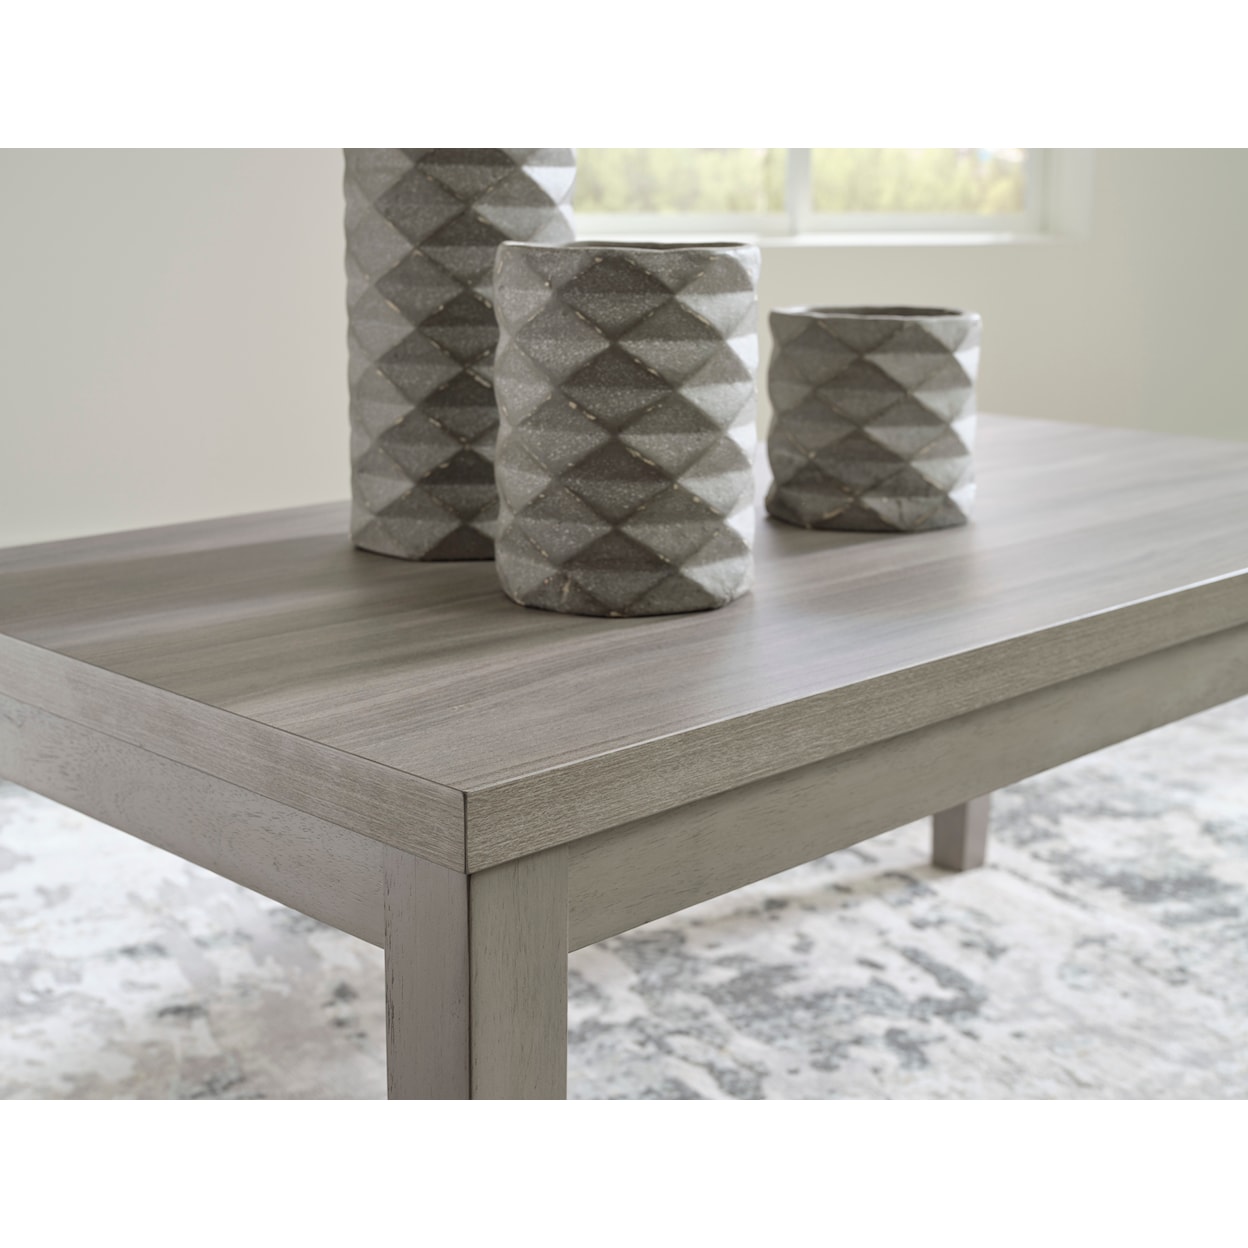 Ashley Furniture Signature Design Loratti 3-Piece Accent Table Set